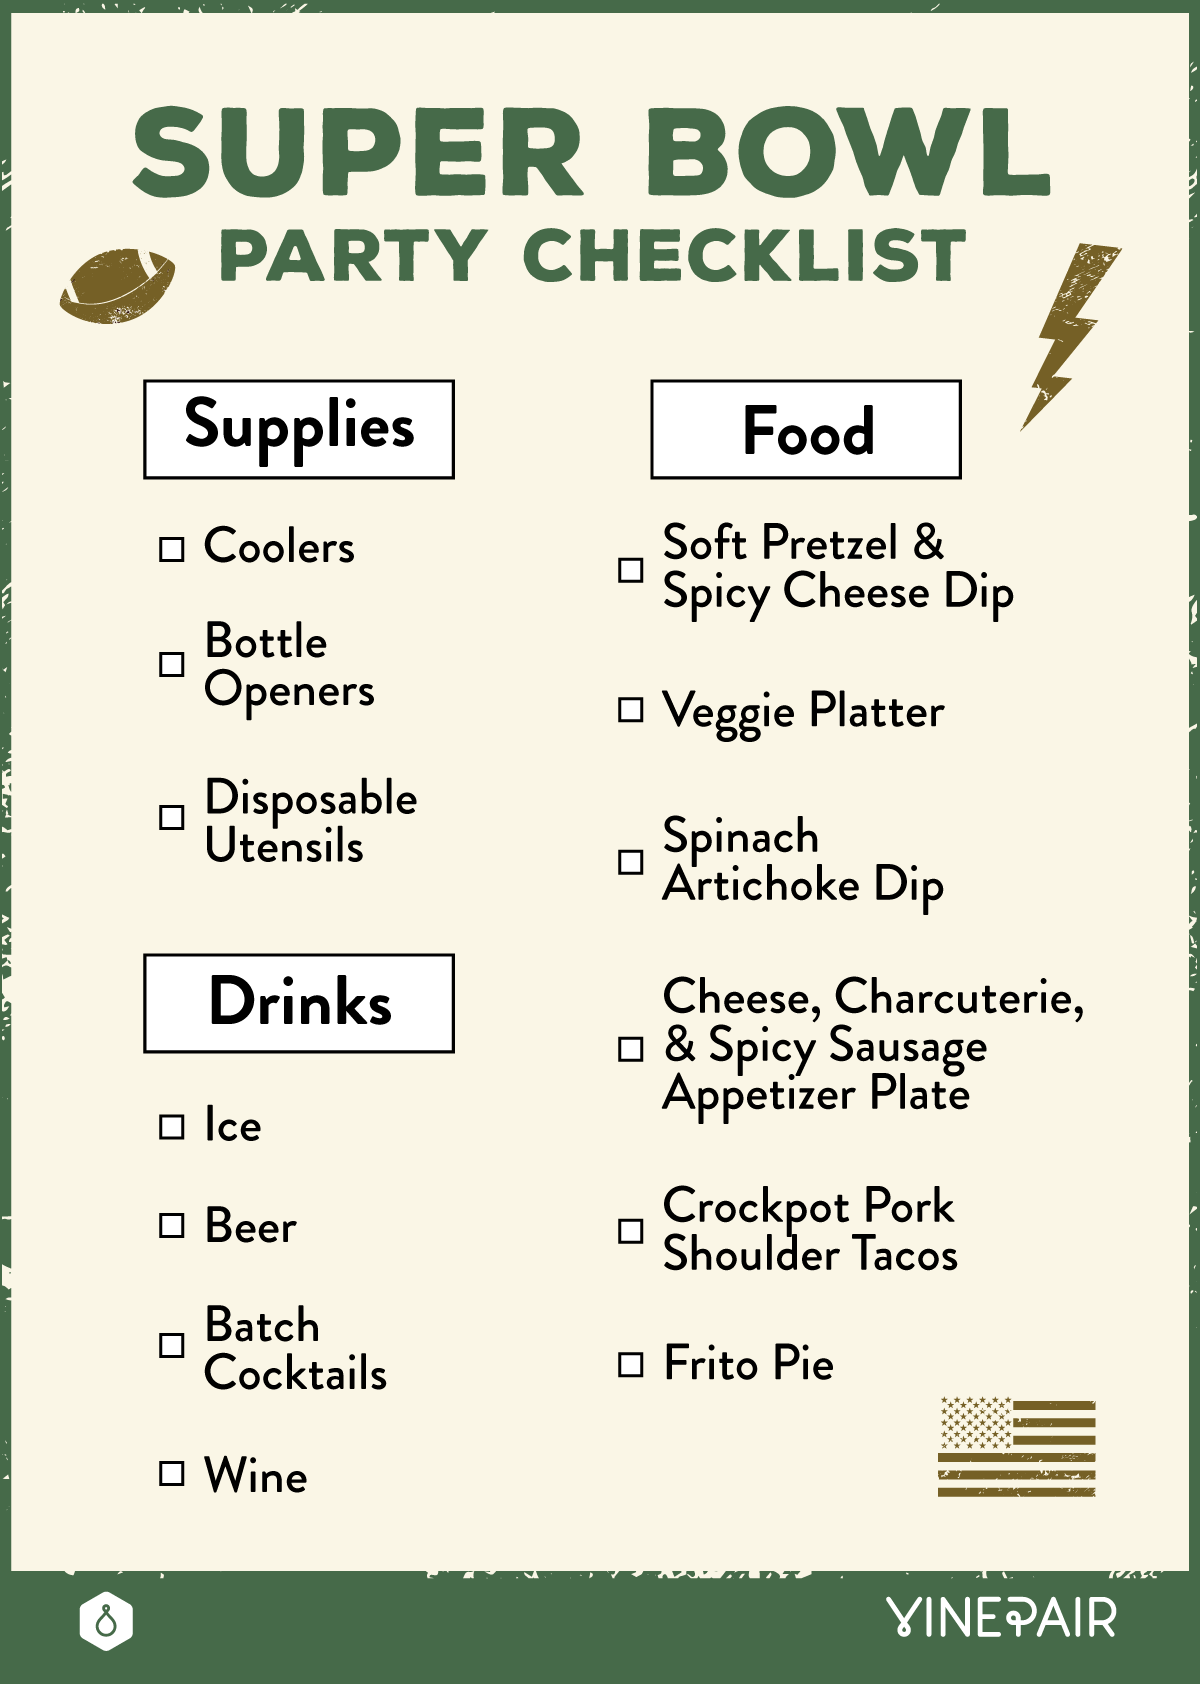 Super Bowl Party Checklist [INFOGRAPHIC]